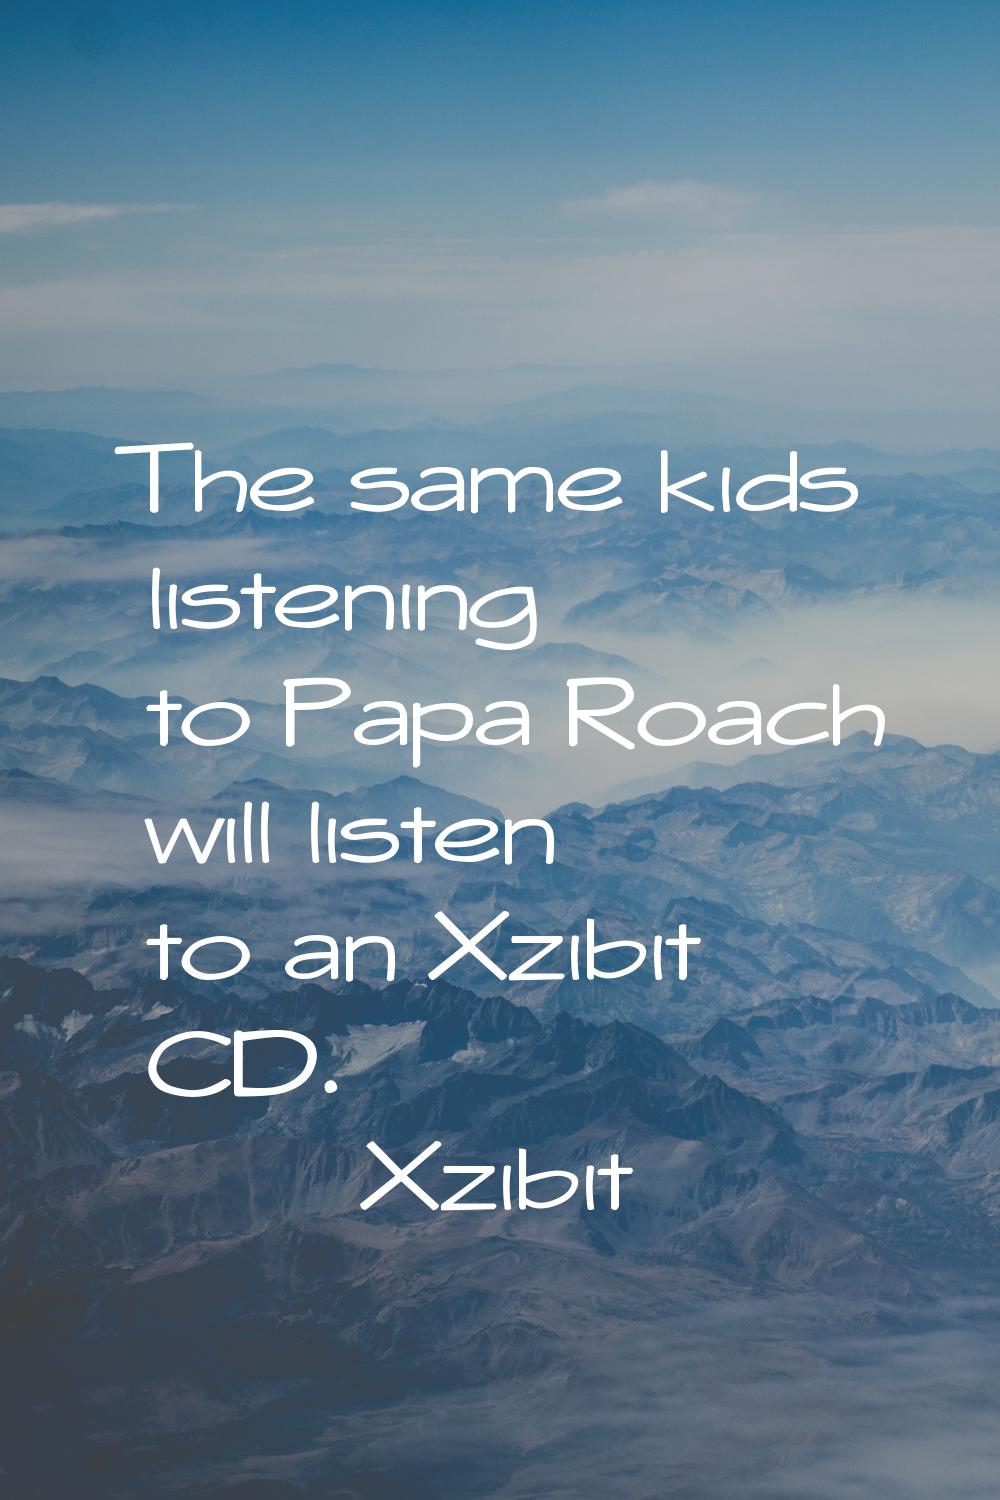 The same kids listening to Papa Roach will listen to an Xzibit CD.